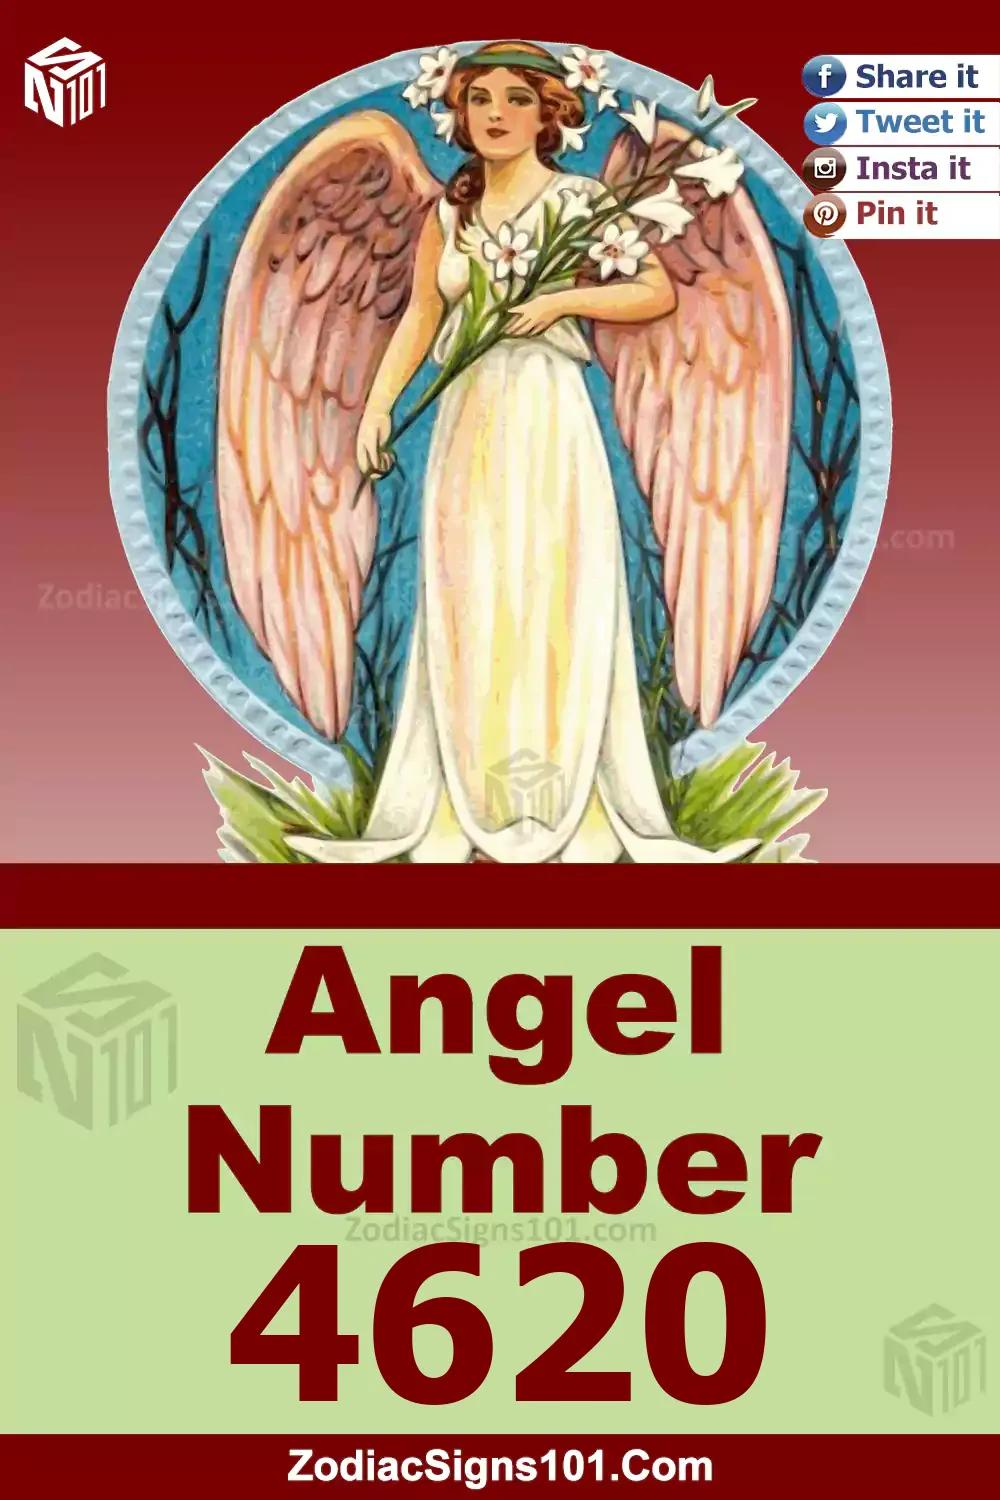 4620-Angel-Number-Meaning.jpg